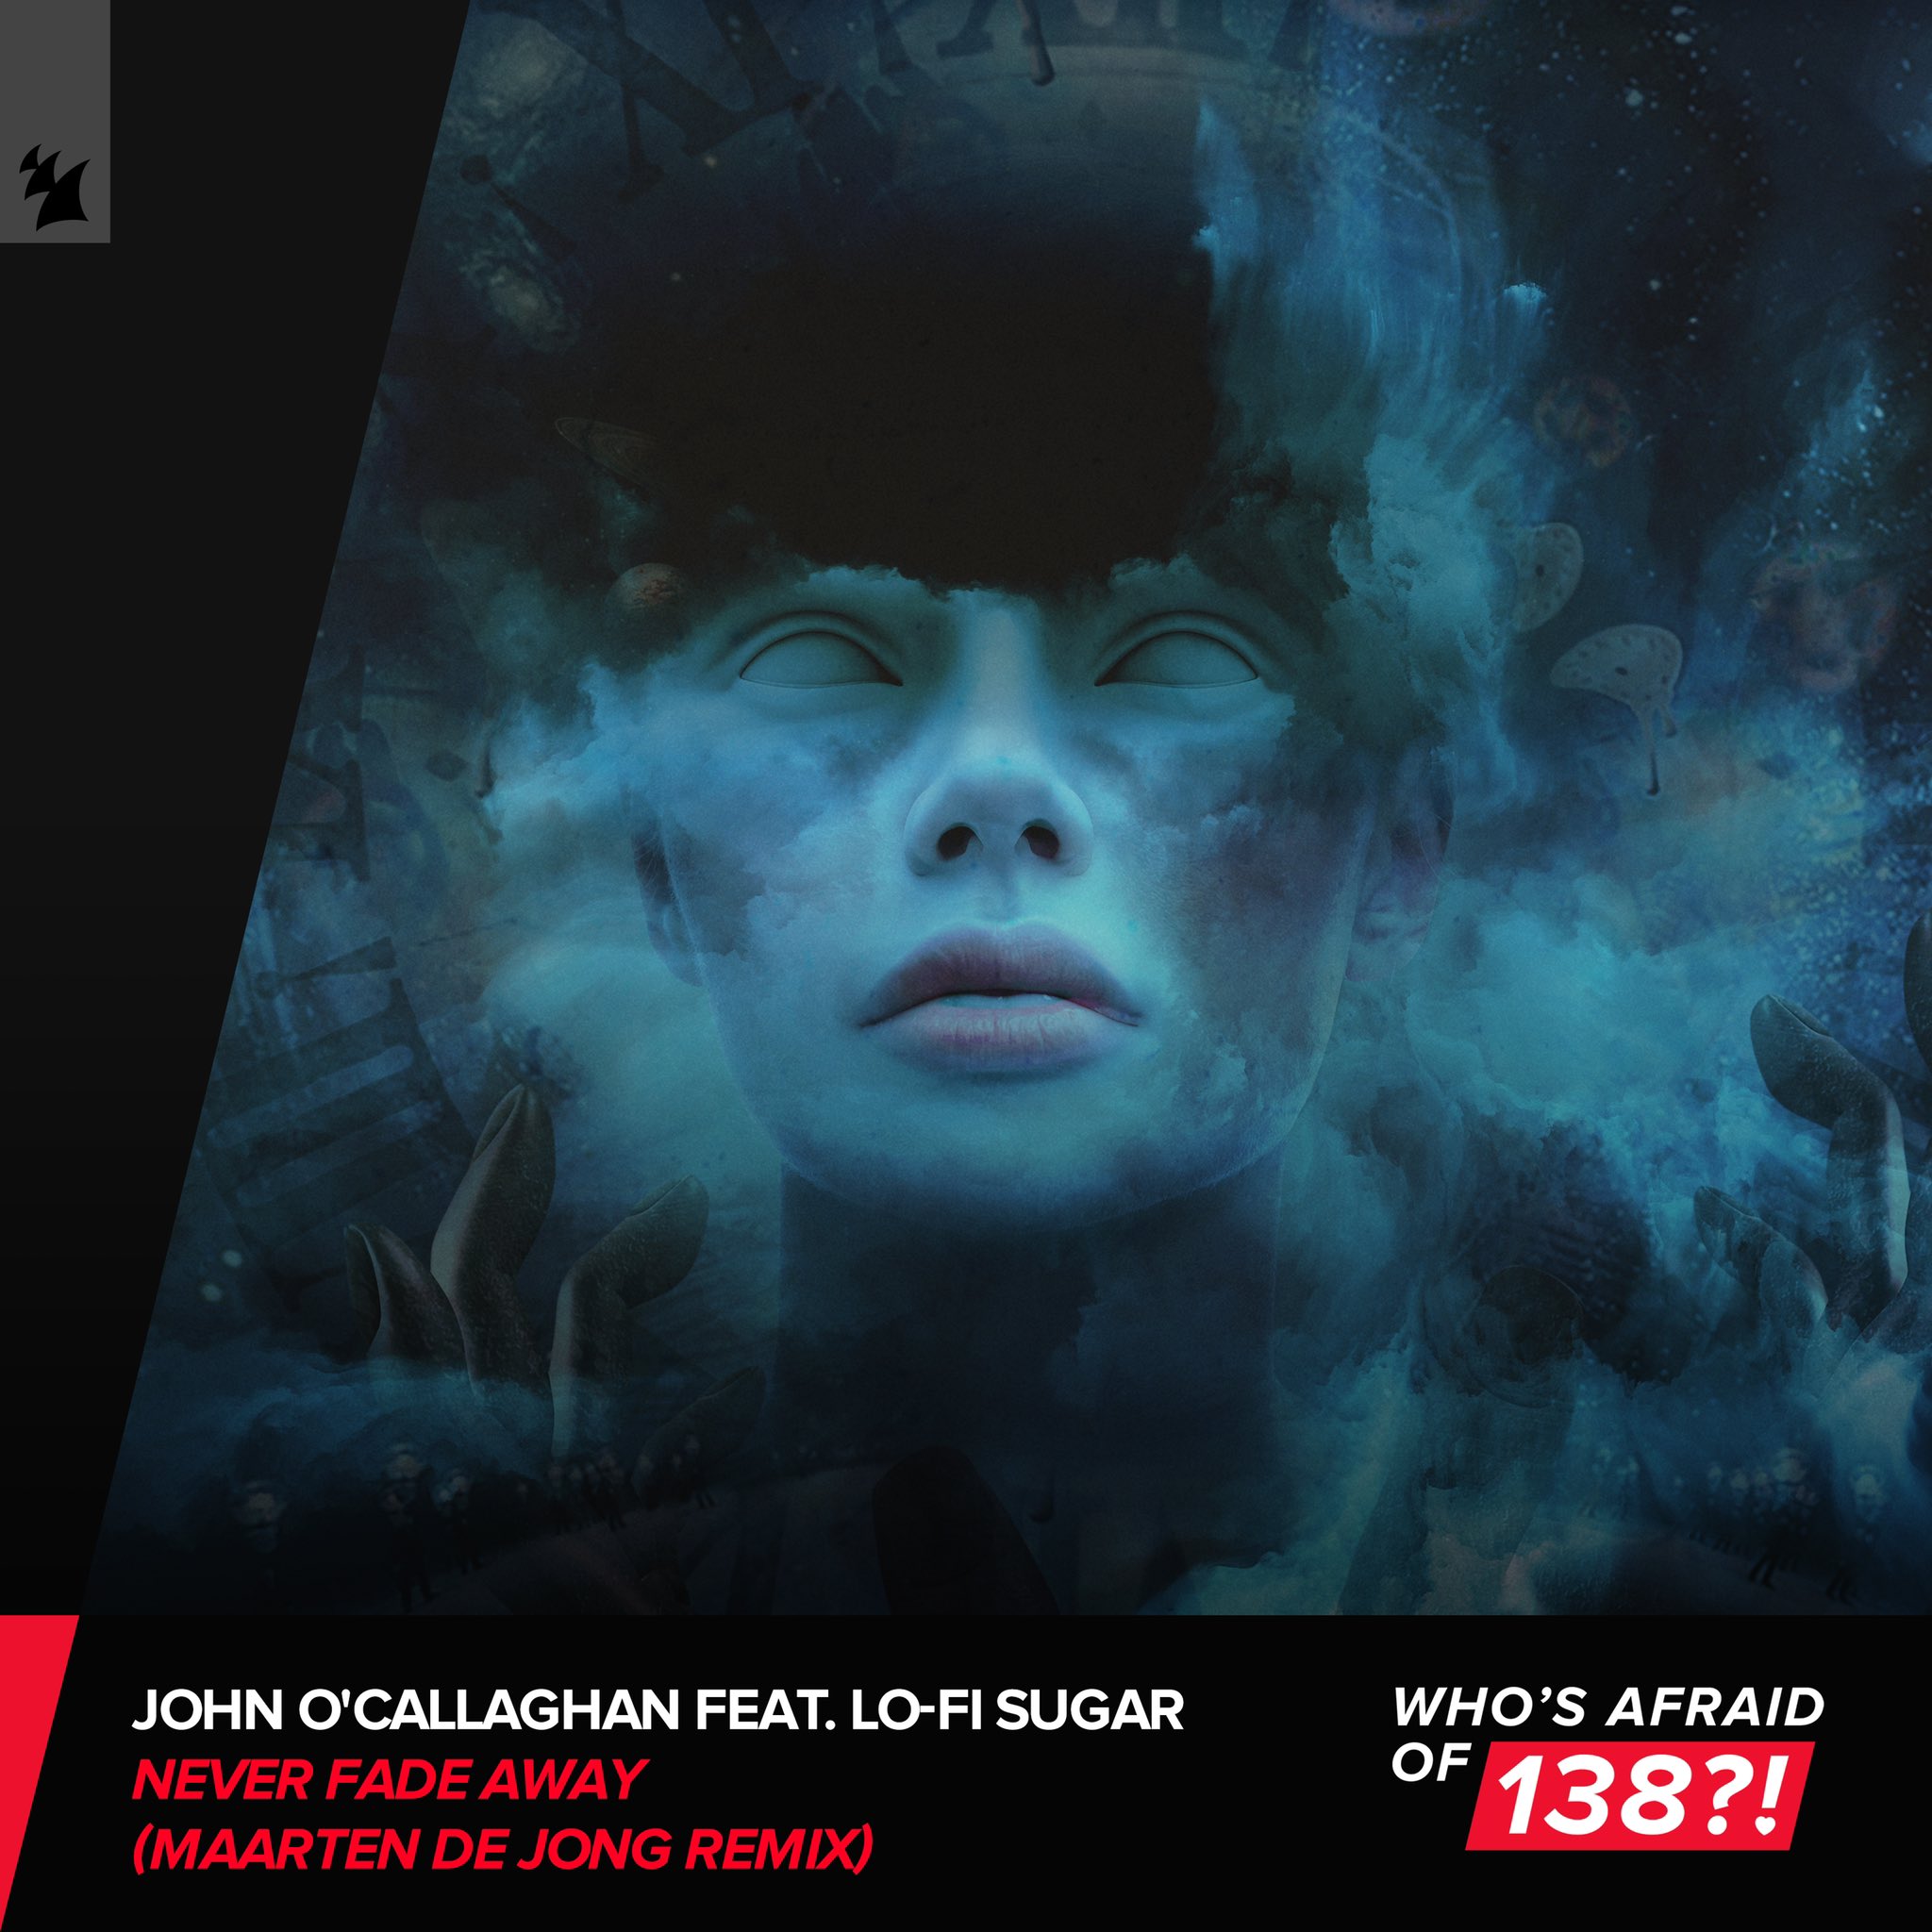 John O'Callaghan feat. Lo-Fi Sugar presents Never Fade Away (Maarten de Jong Remix) on Who's Afraid Of 138?!